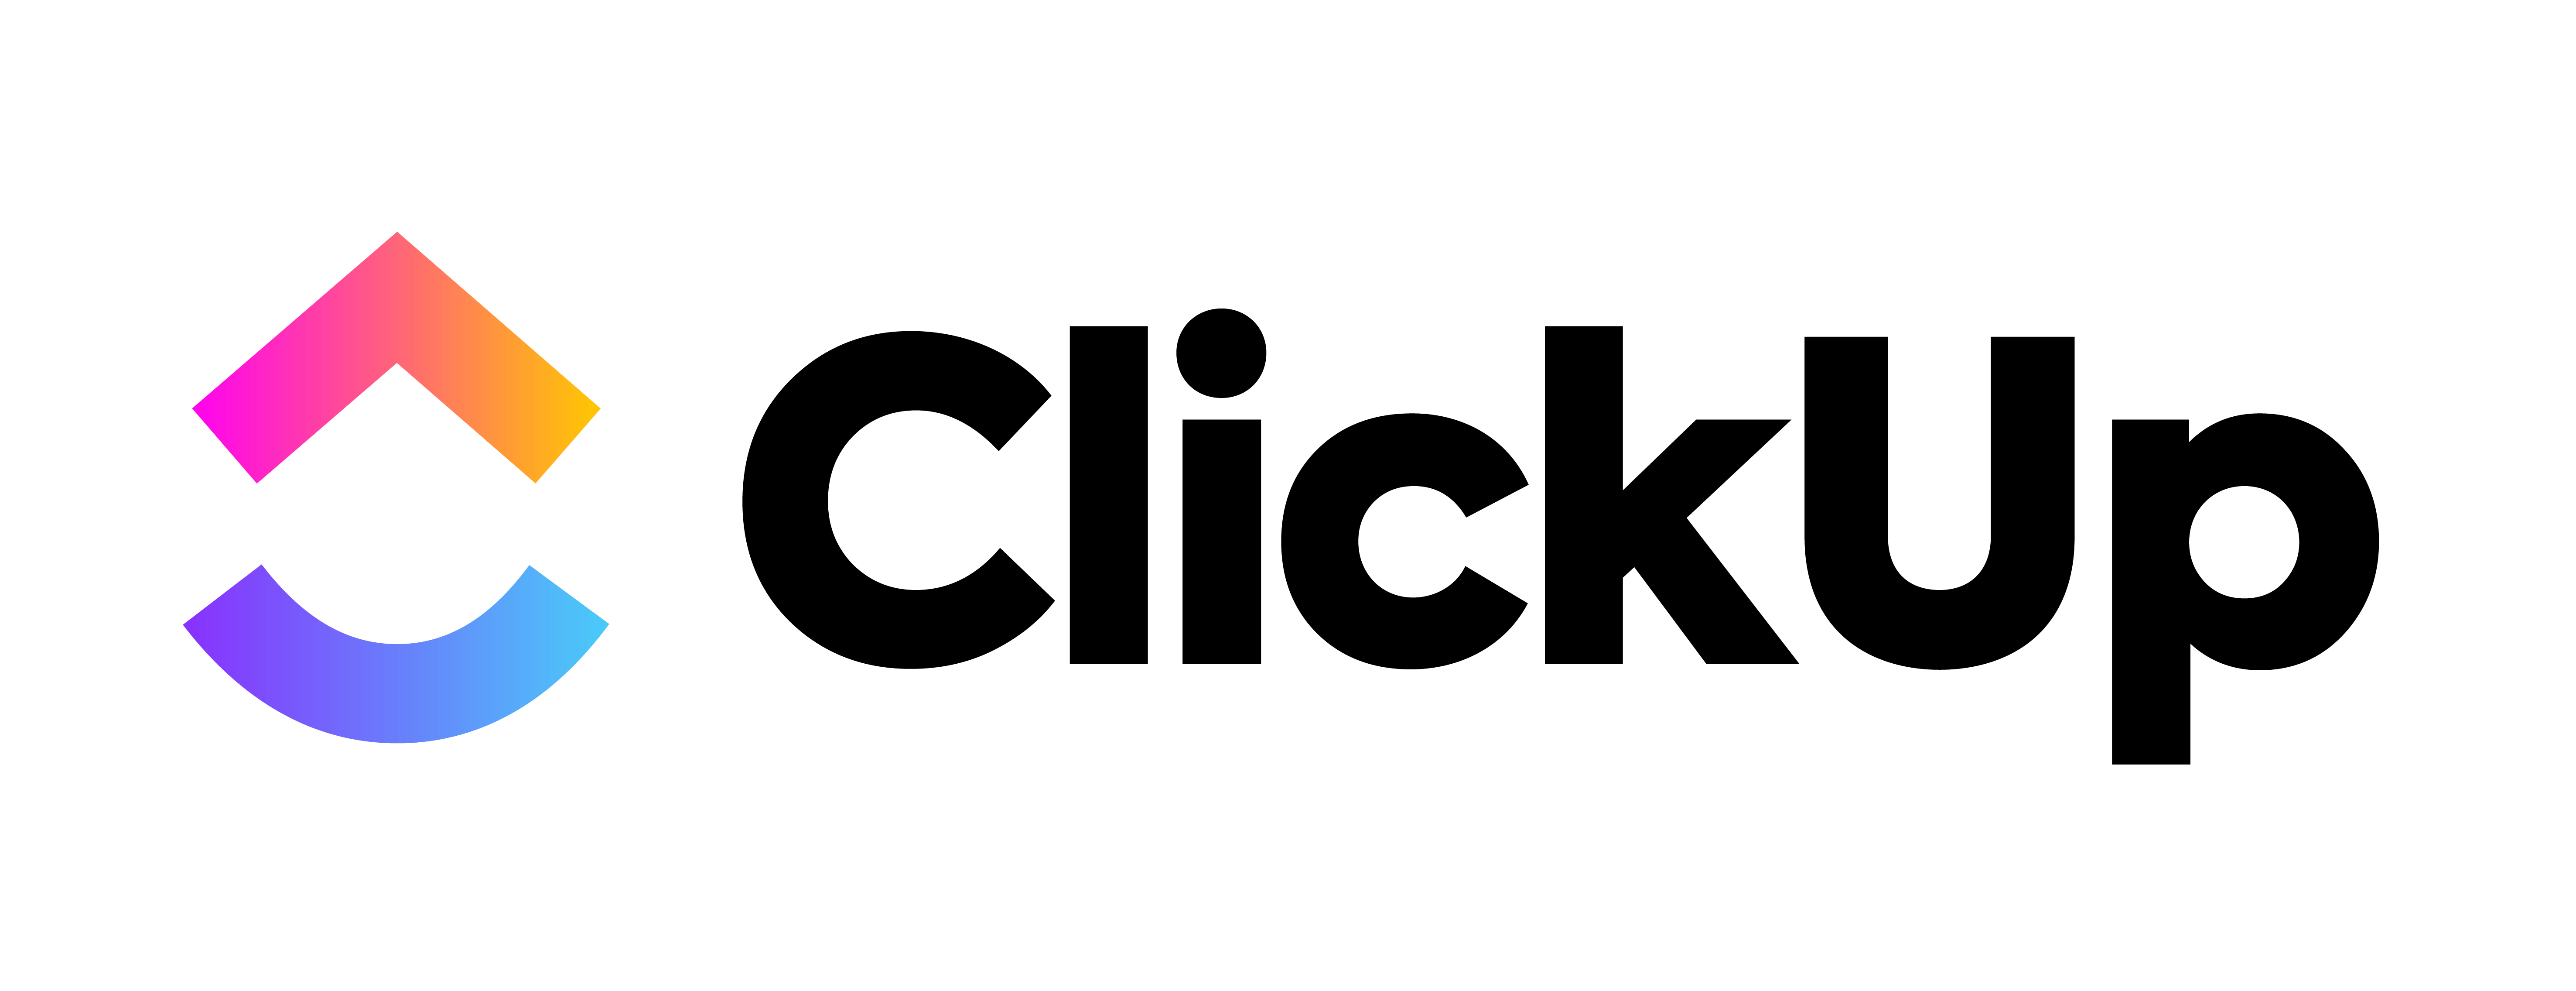 ClickUp | #1 Productivity Software